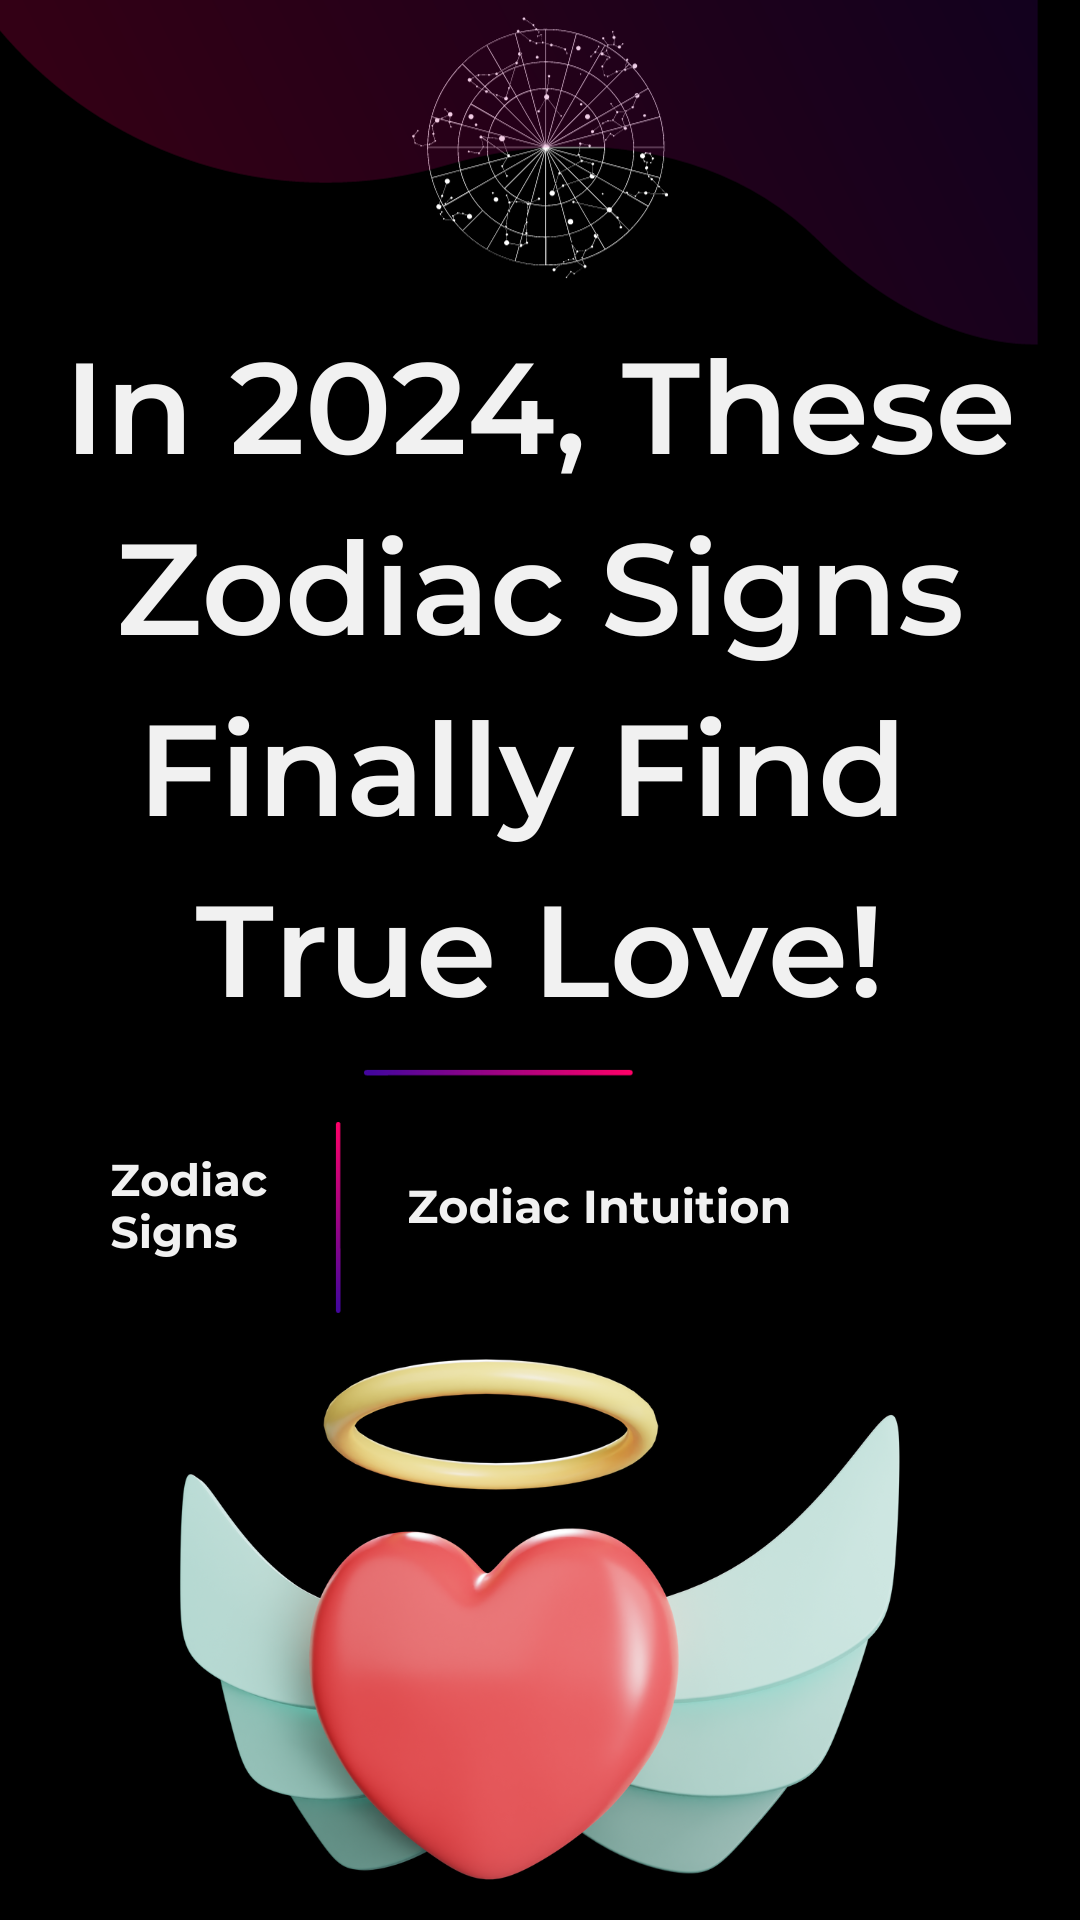 In 2024, These Zodiac Signs Finally Find True Love!